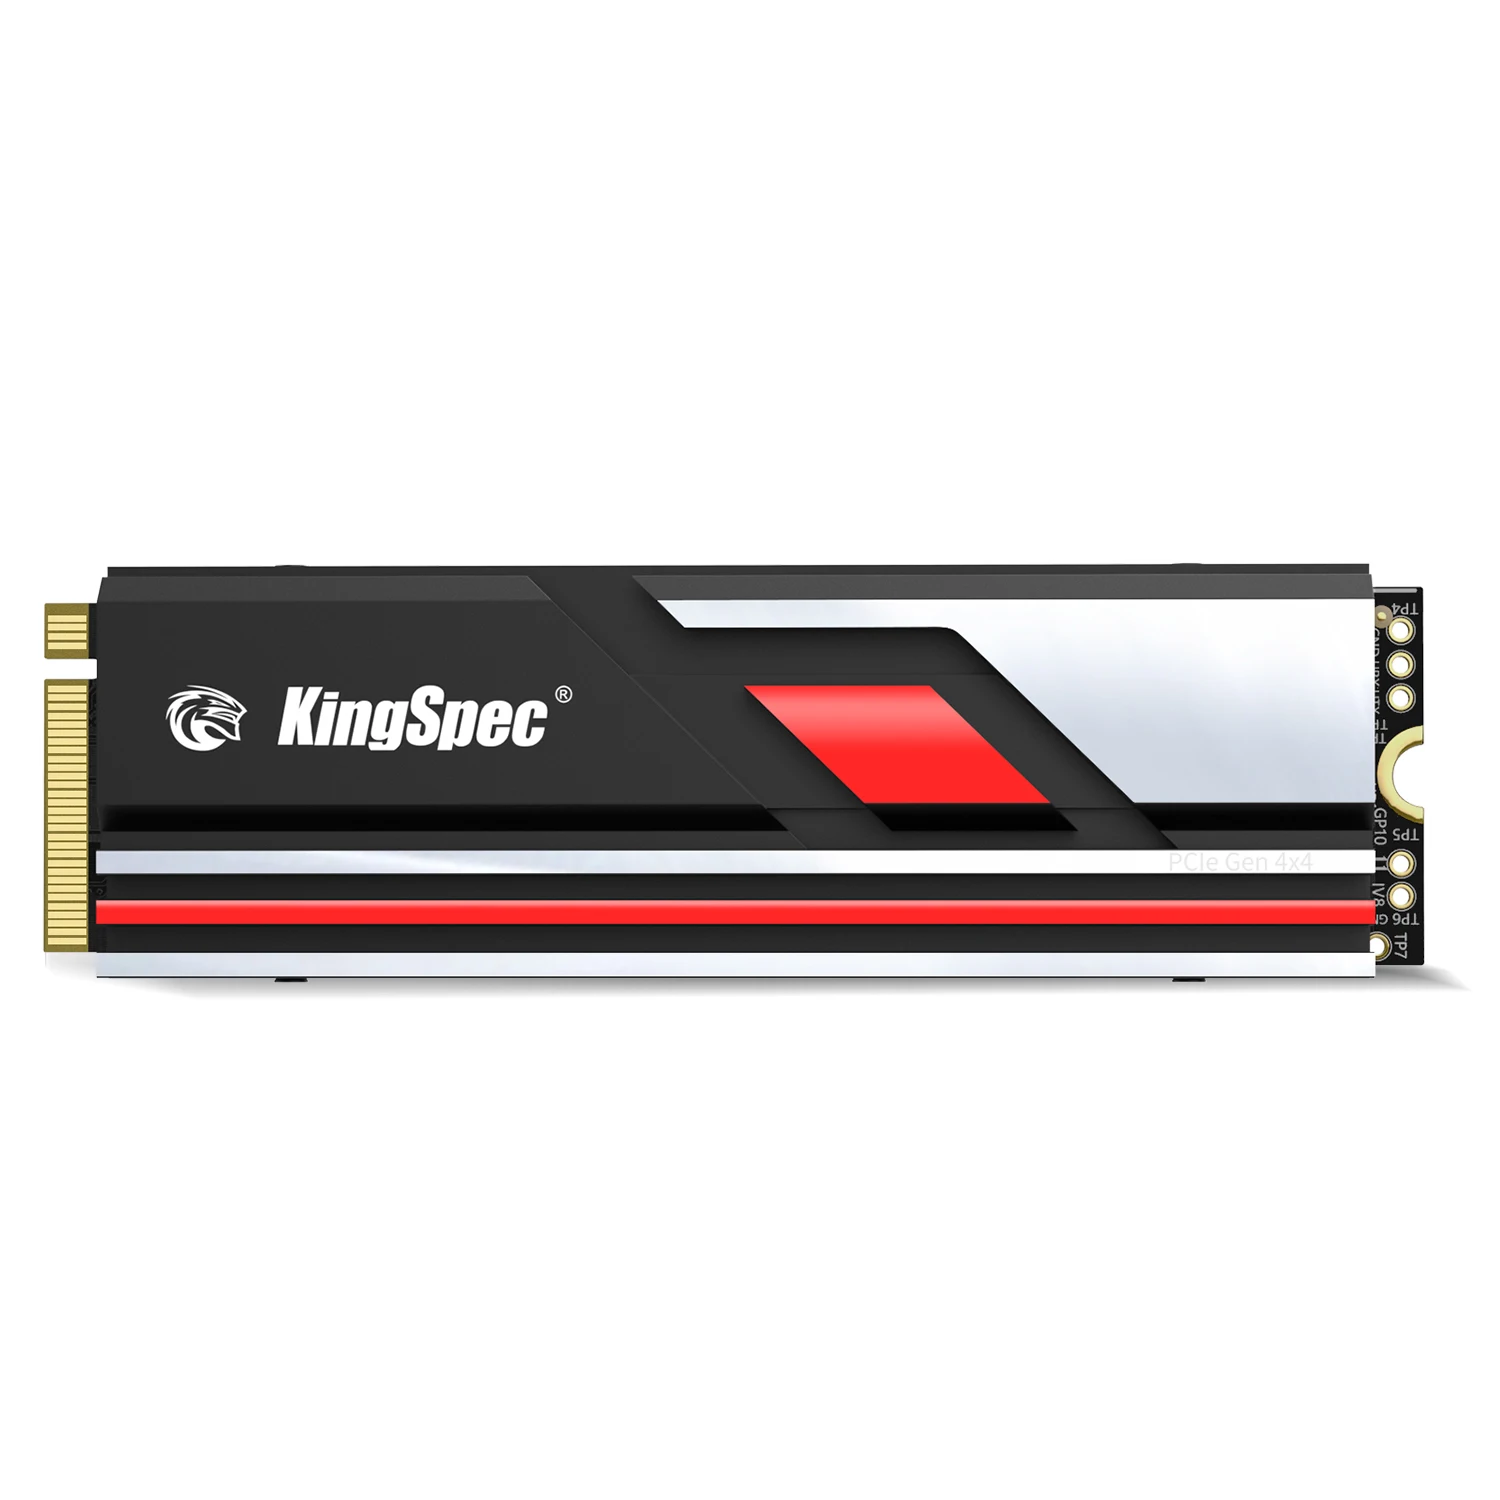 

KingSpec Hot Sale 2280 NVMe PS5 Gaming M.2 PCIe gen 4 512 GB PC SSD m2 512gb ssd With Heatsink